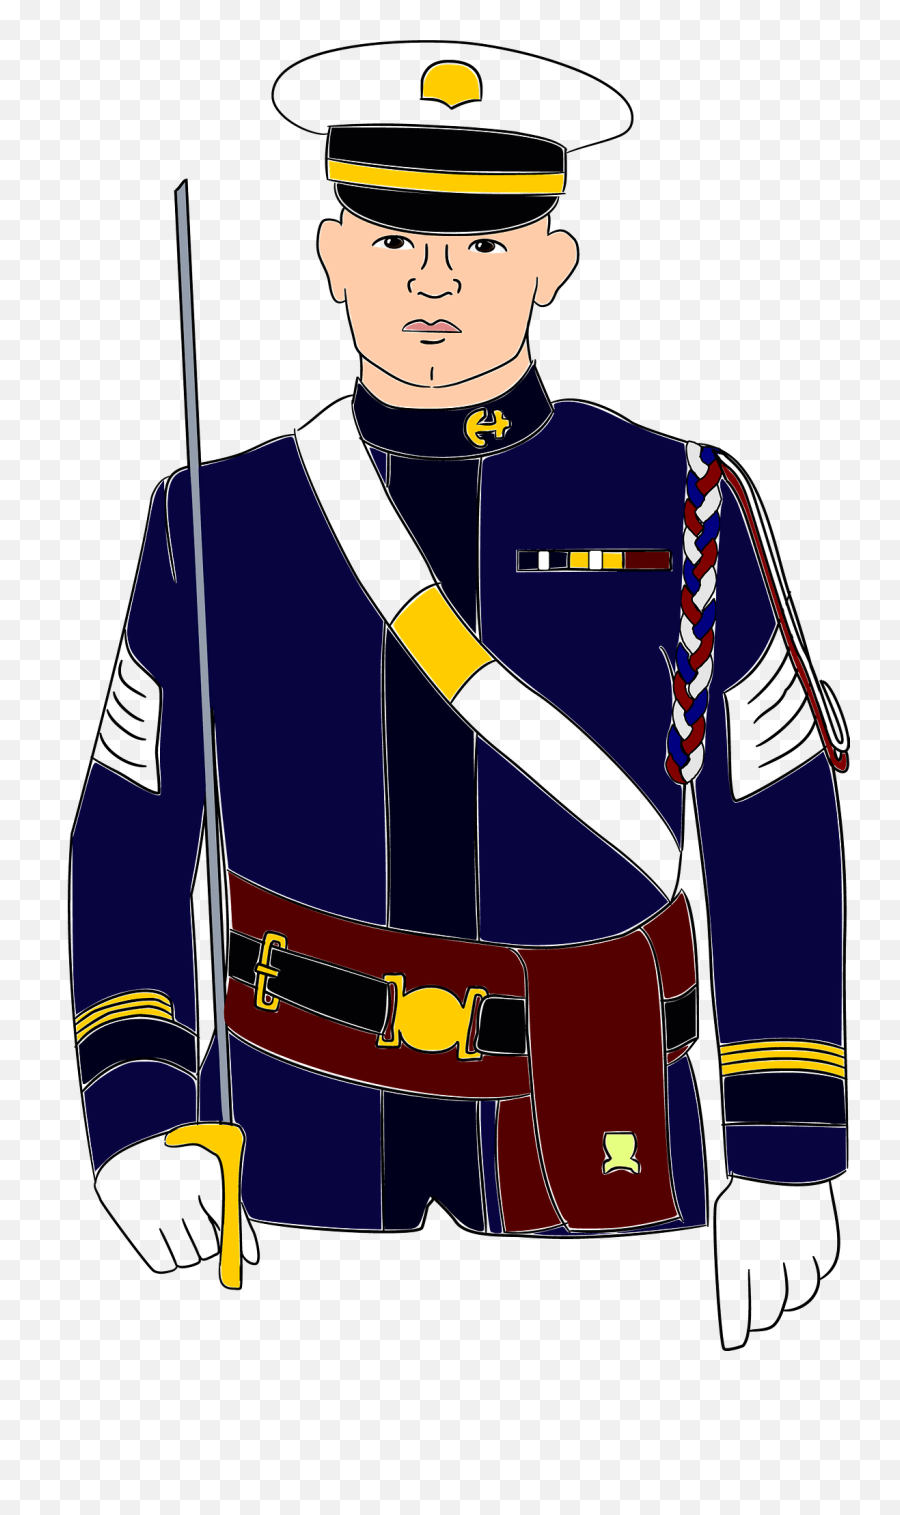 Dress Man Military - Free Vector Graphic On Pixabay Soldado Com Uniforme Azul Png,Soldier Png